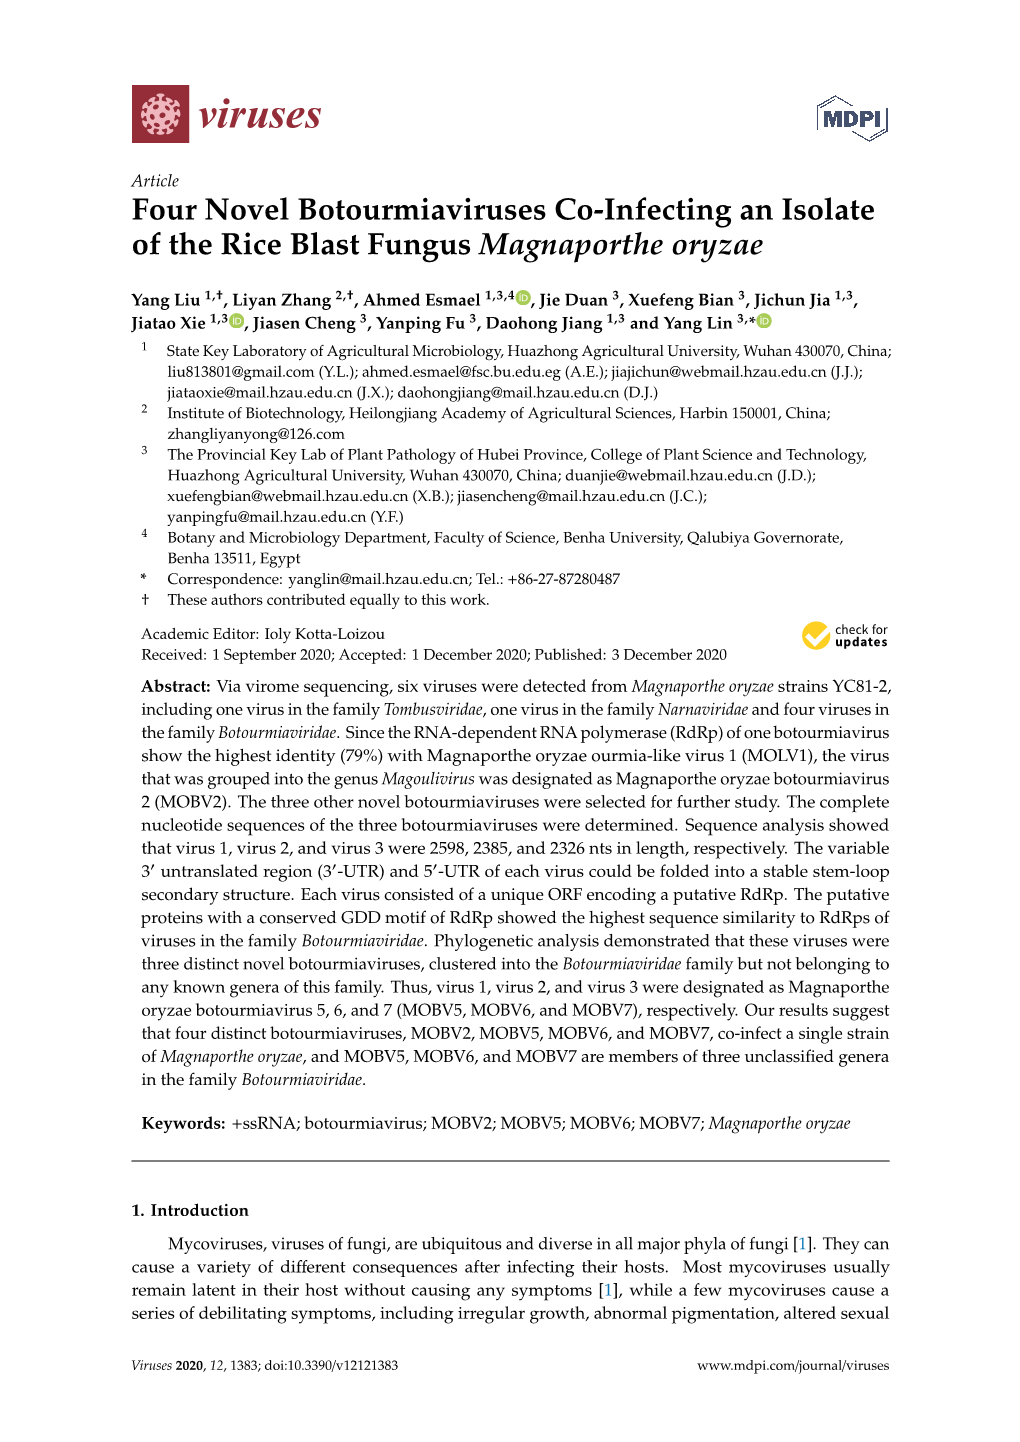 Four Novel Botourmiaviruses Co-Infecting an Isolate of the Rice Blast Fungus Magnaporthe Oryzae